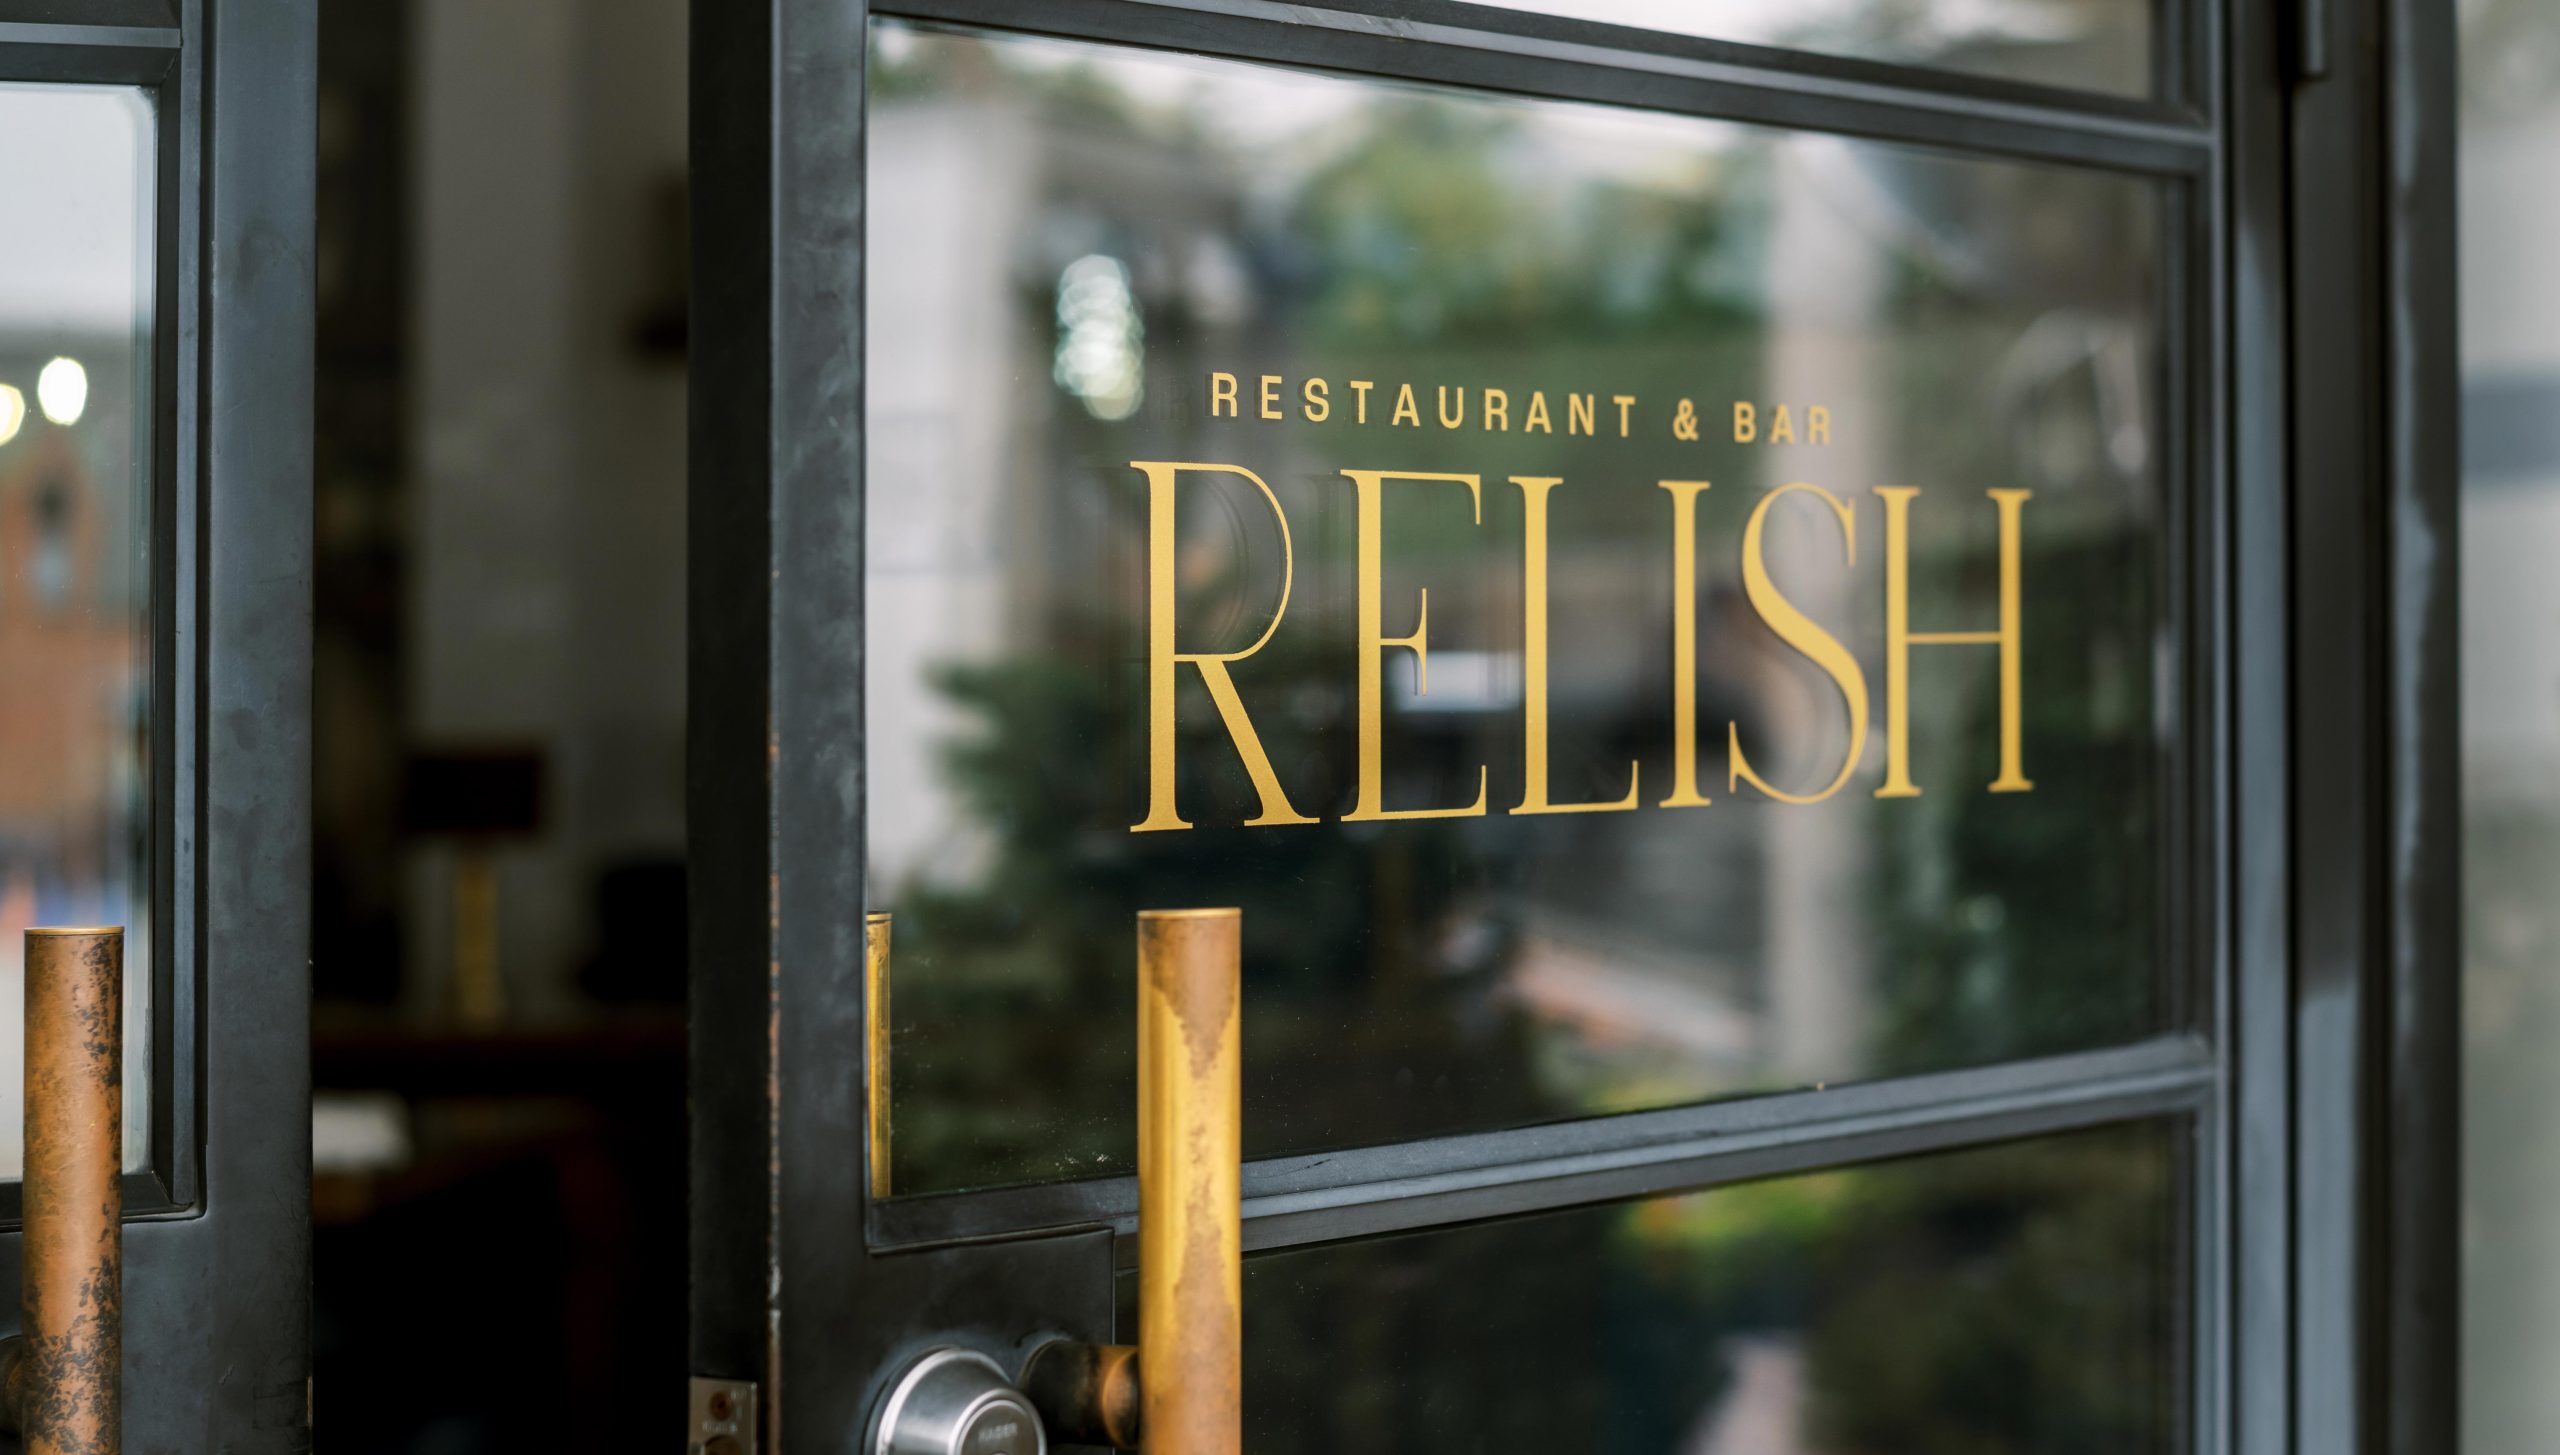 Relish Restaurant & Bar - Neiter Creative